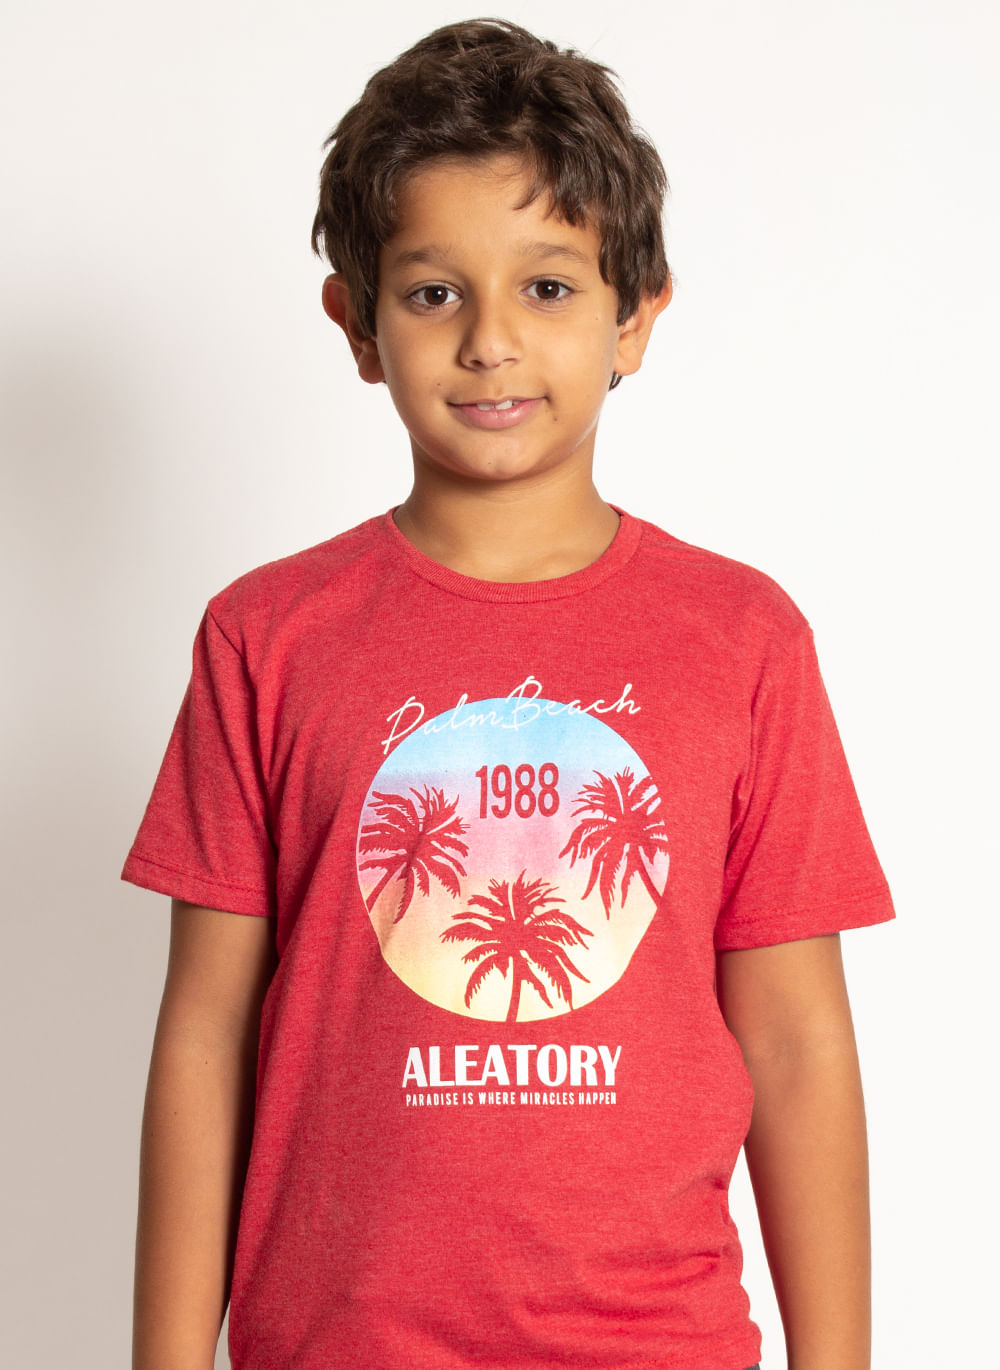 camiseta-aleatory-infantil-estampada-palm-beach-modelo-2020-1-